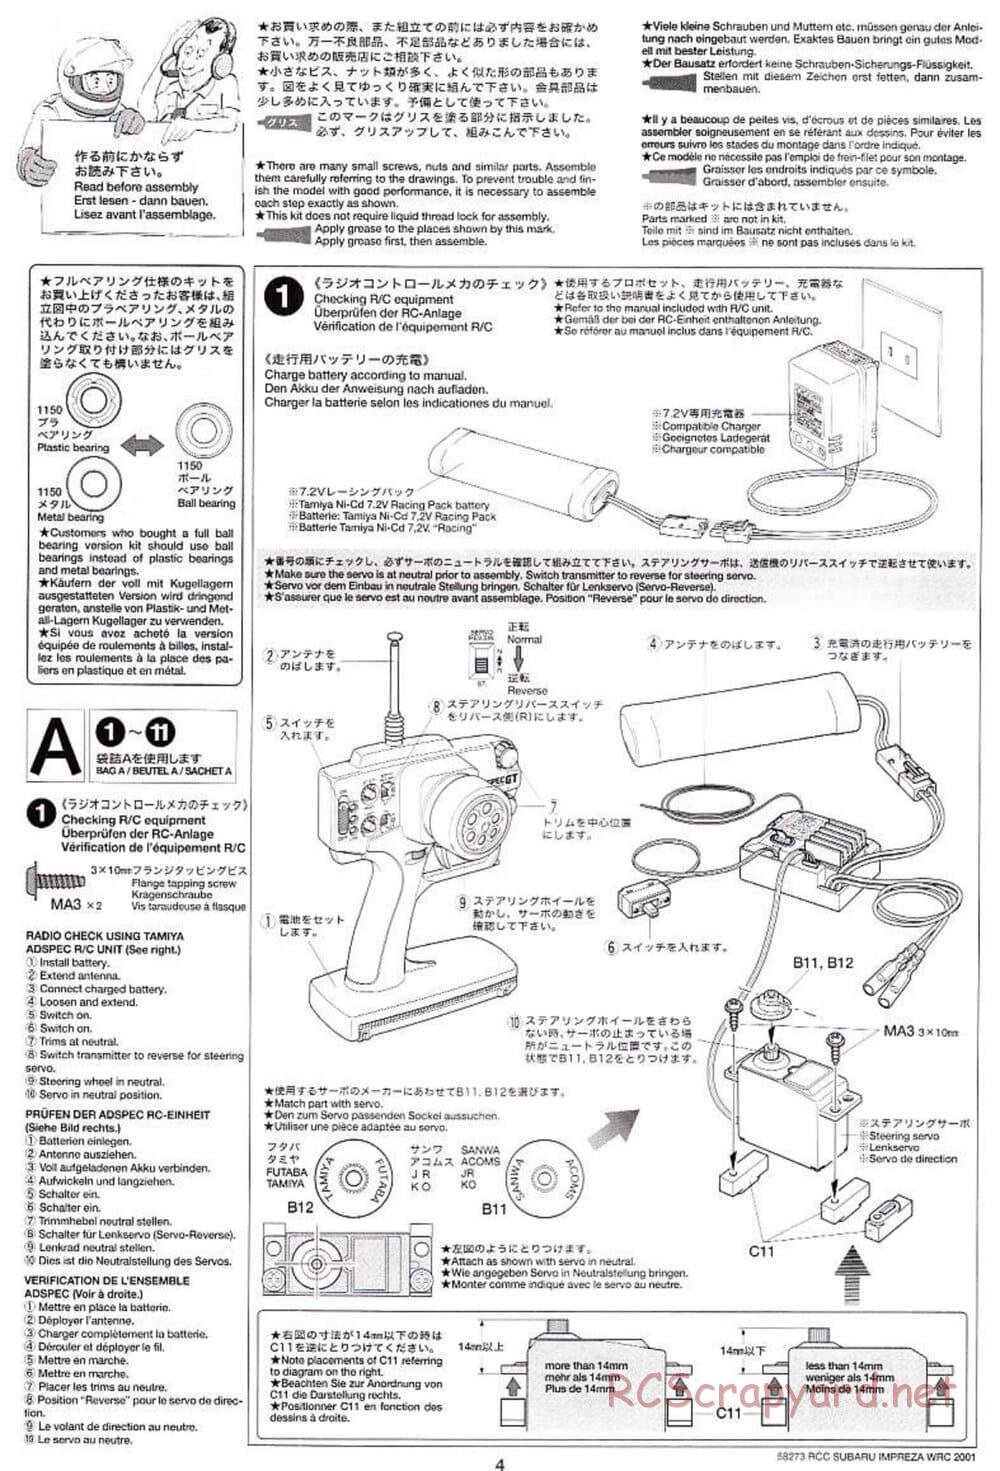 Tamiya - Subaru Impreza WRC 2001 - TL-01 Chassis - Manual - Page 4